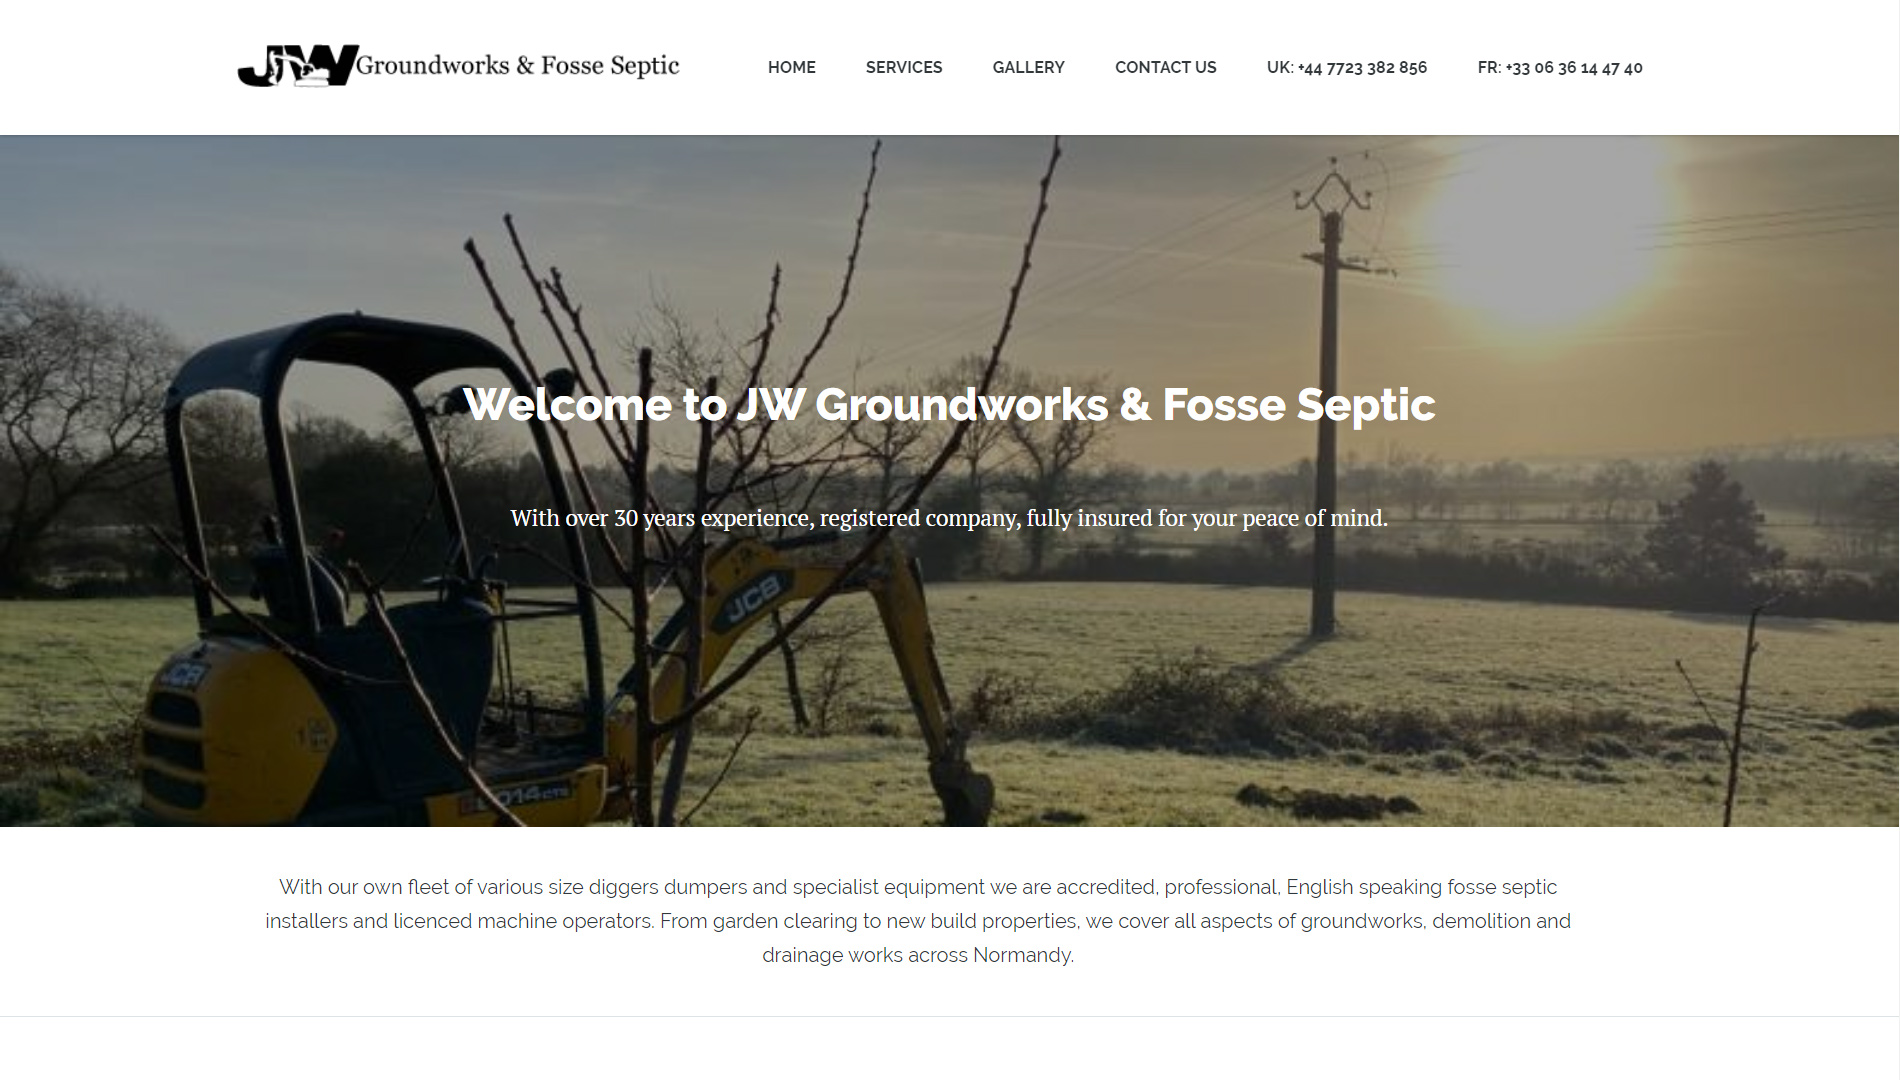 JW Groundworks & Fosse Septic